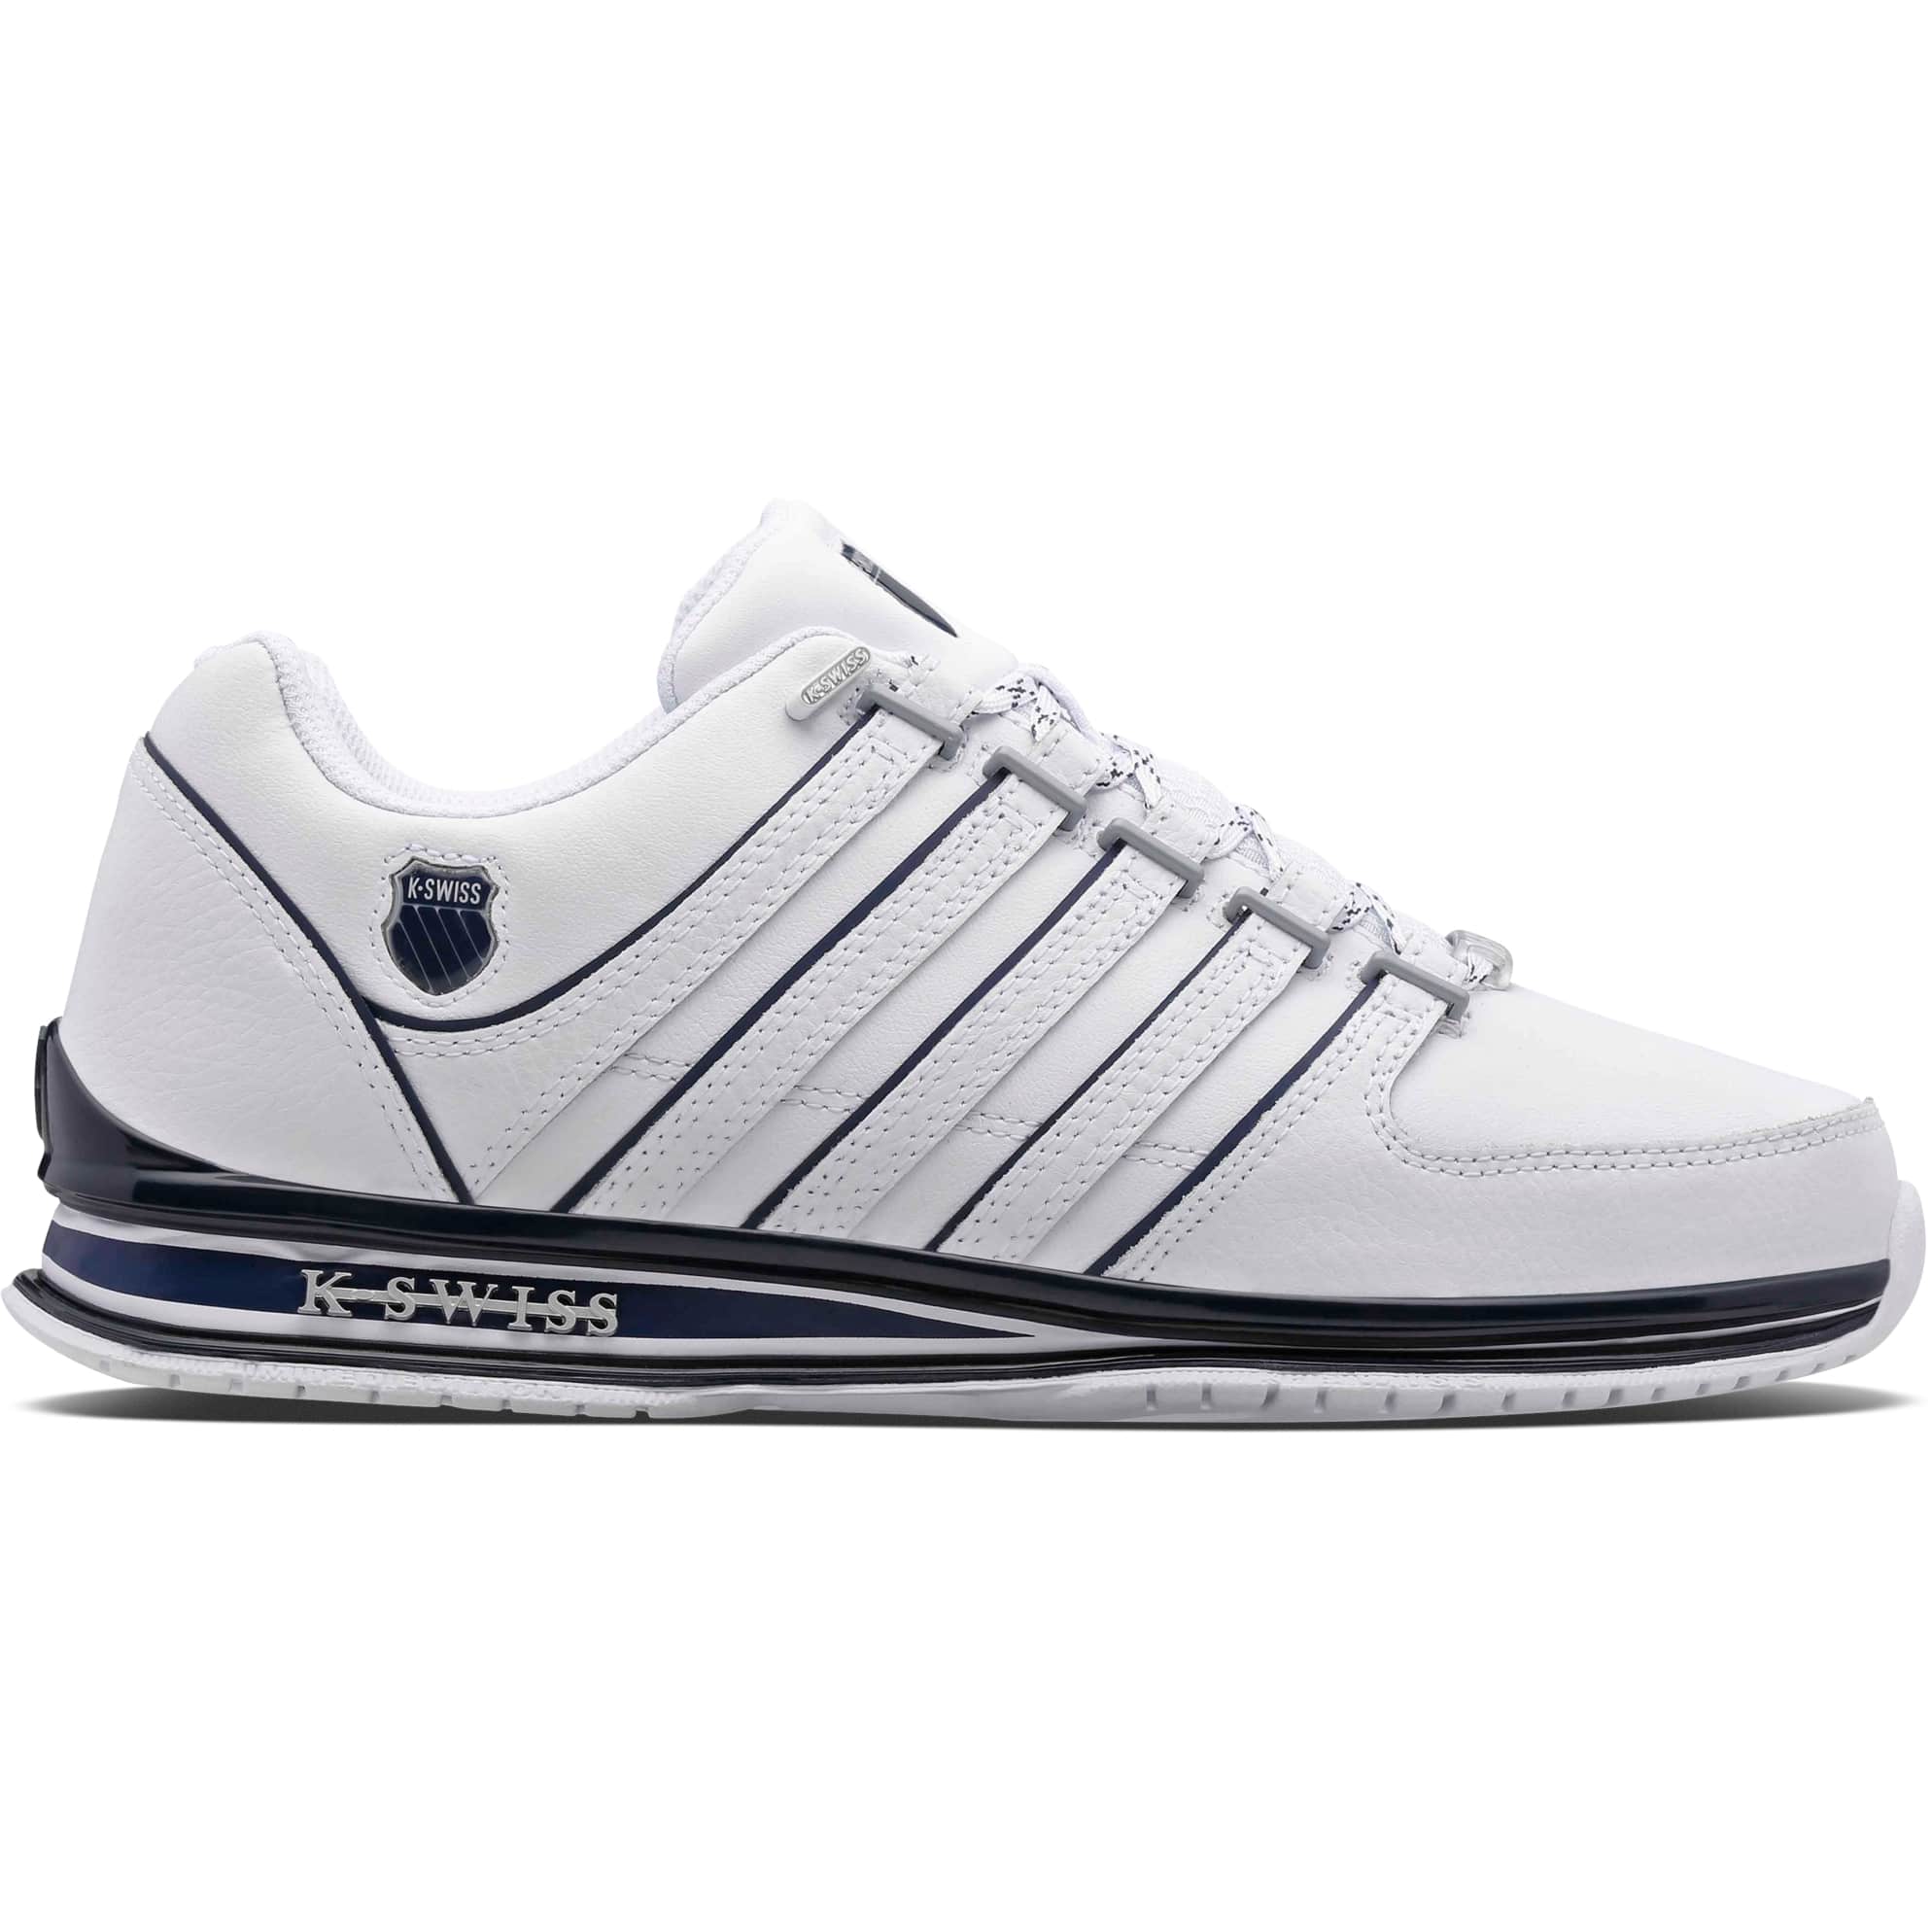 K-Swiss Mens Rinzler Trainers Shoes - UK 10 White 2951